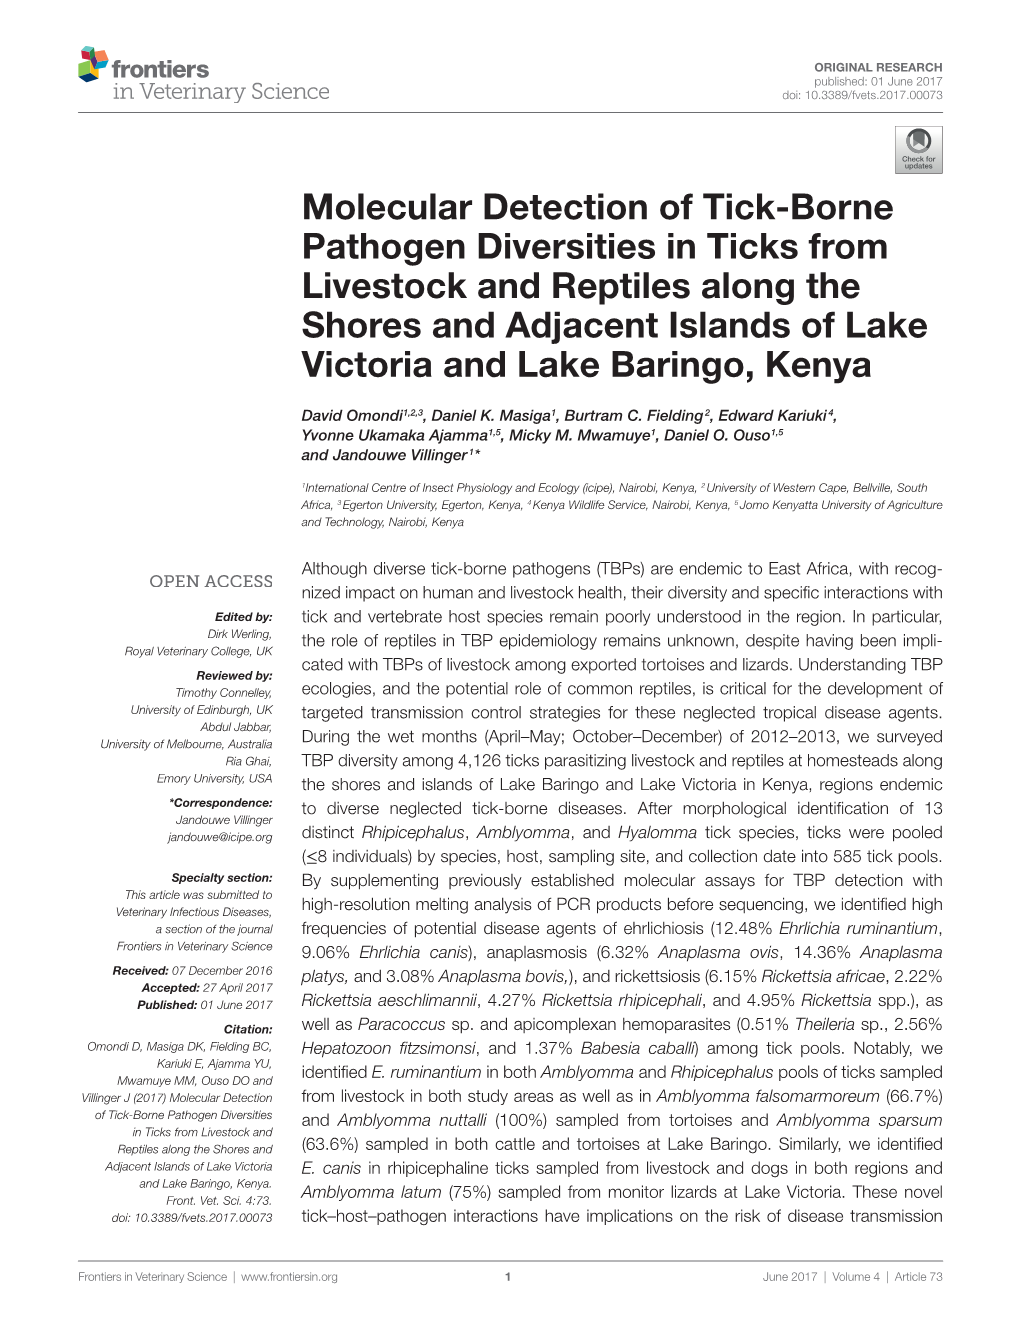 Molecular Detection of Tick-Borne Pathogen Diversities in Ticks From